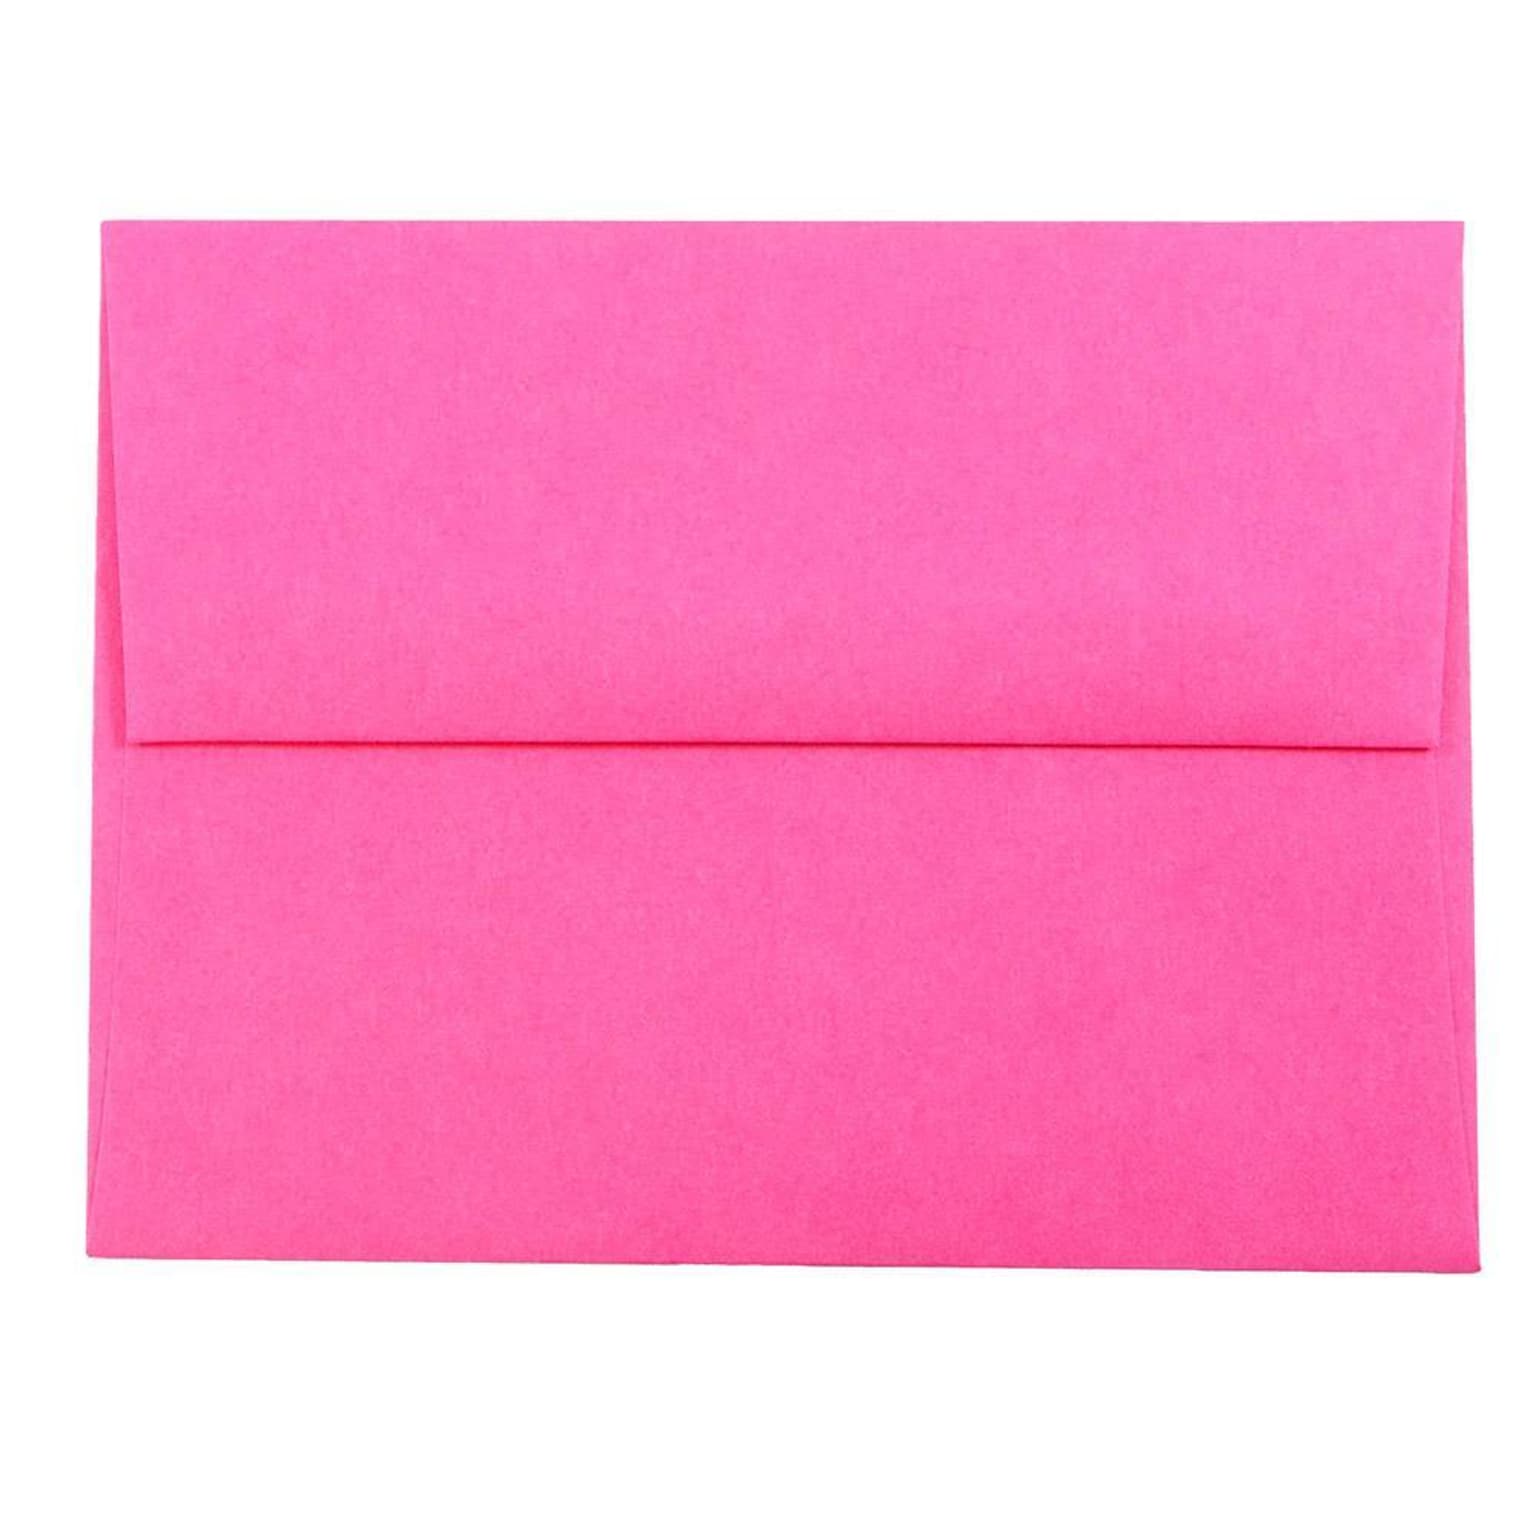 JAM Paper A2 Colored Invitation Envelopes, 4.375 x 5.75, Ultra Fuchsia Pink, Bulk 1000/Carton (12844B)